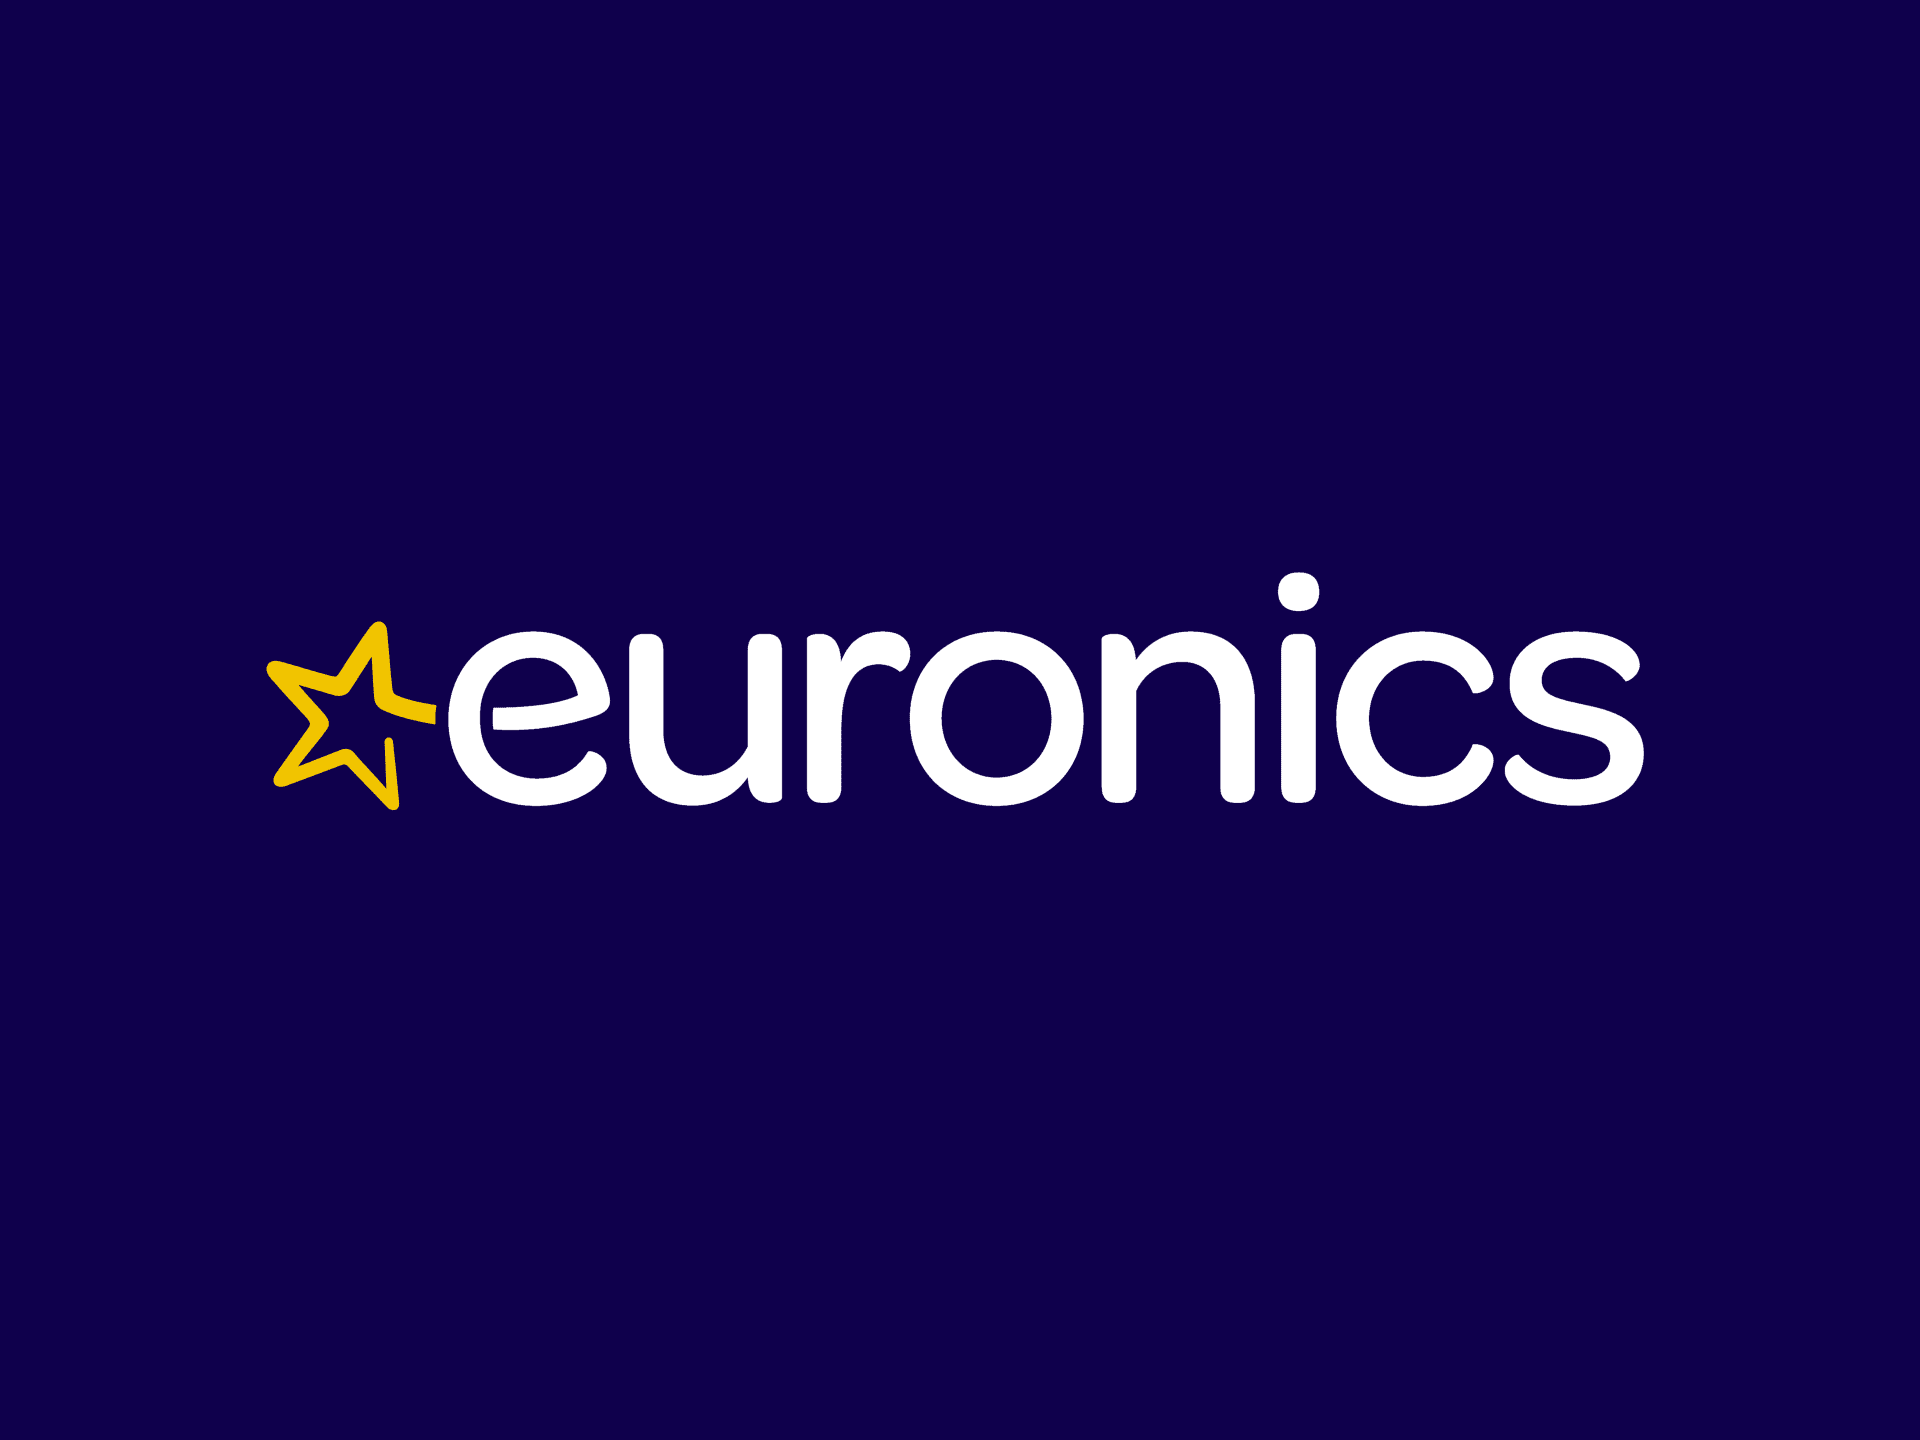 Euronics logo 1 1